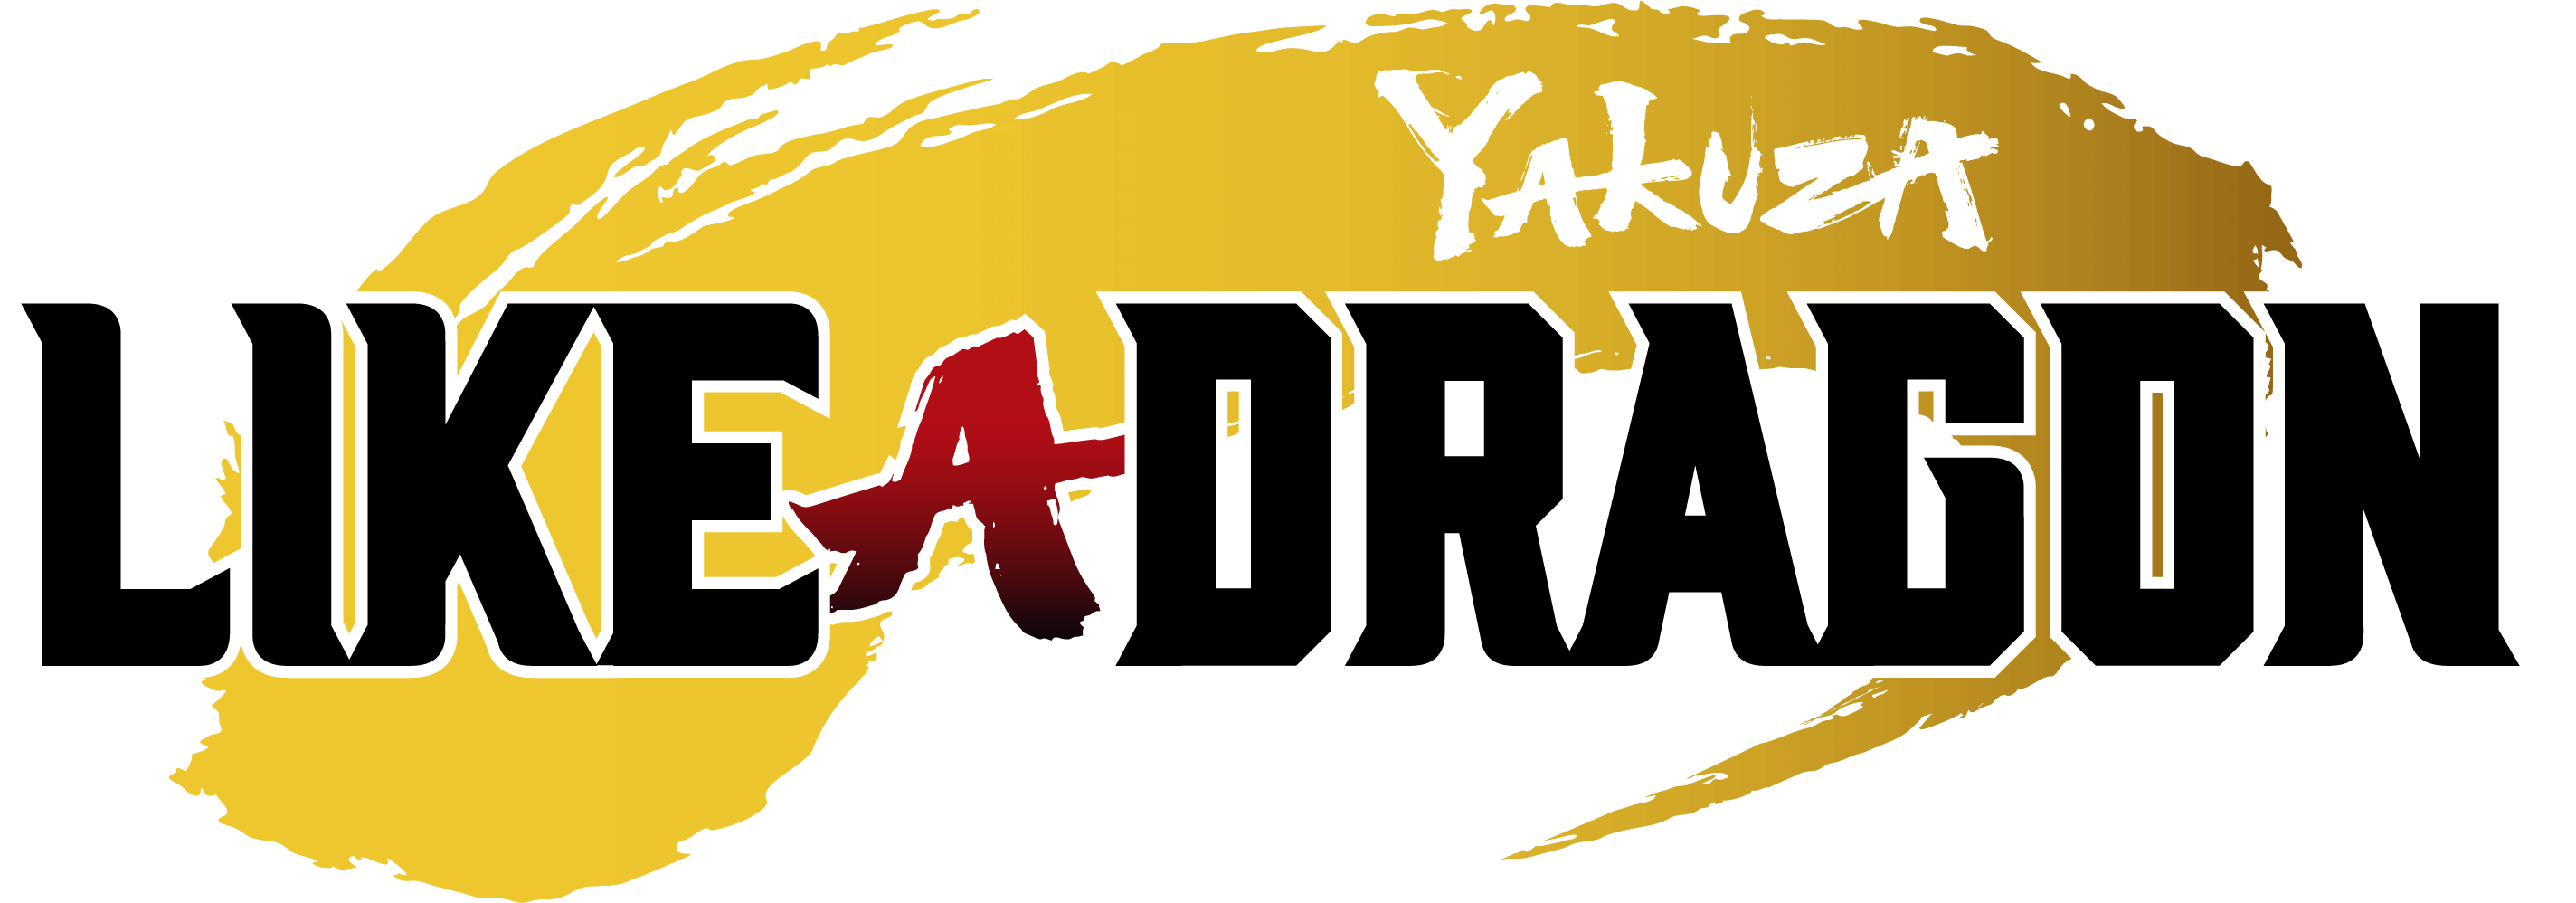 Like a Dragon, Yakuza Wiki